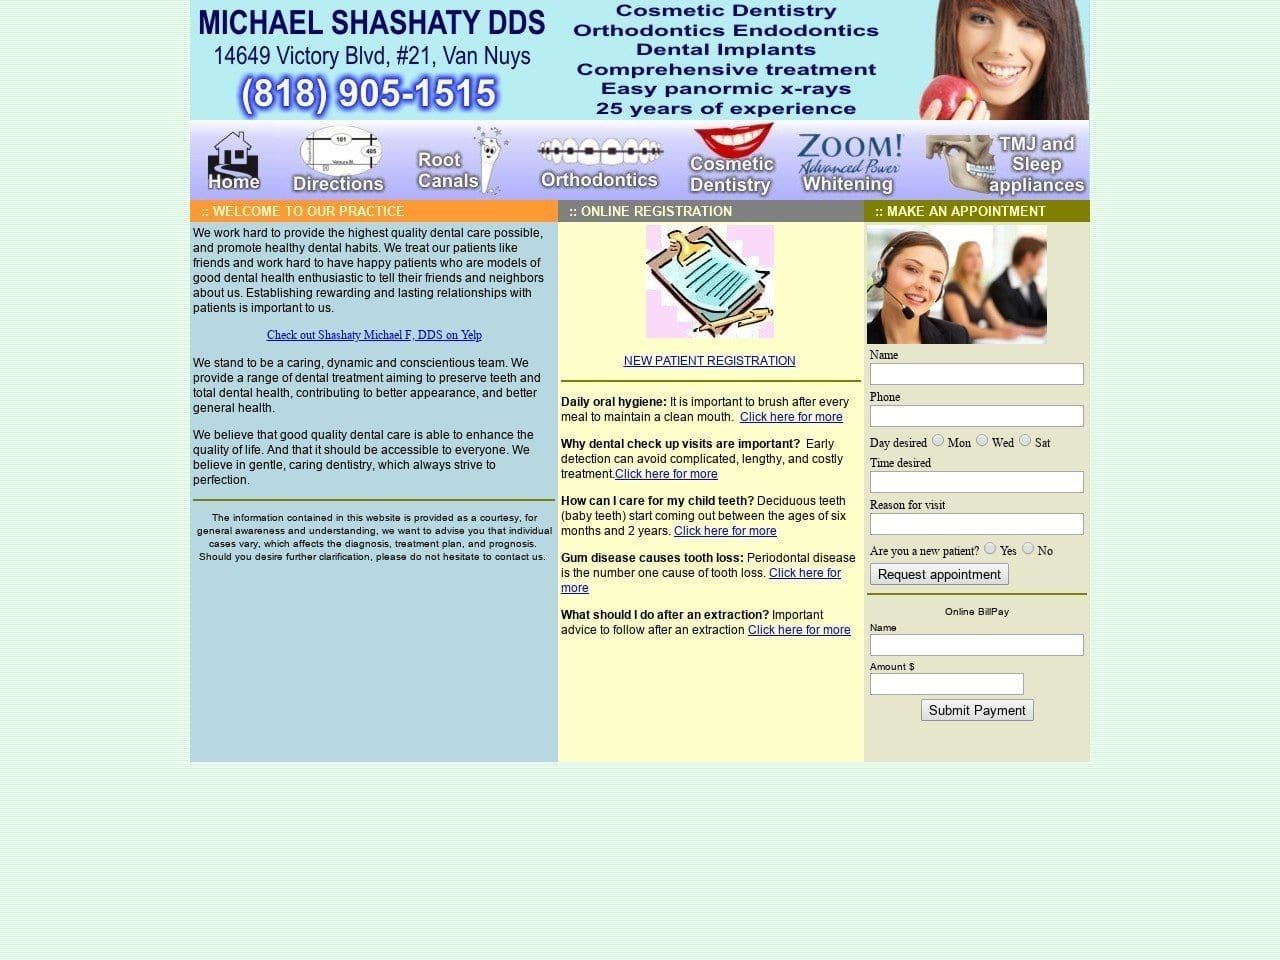 Michael Shashaty DDS Website Screenshot from drshashaty.com